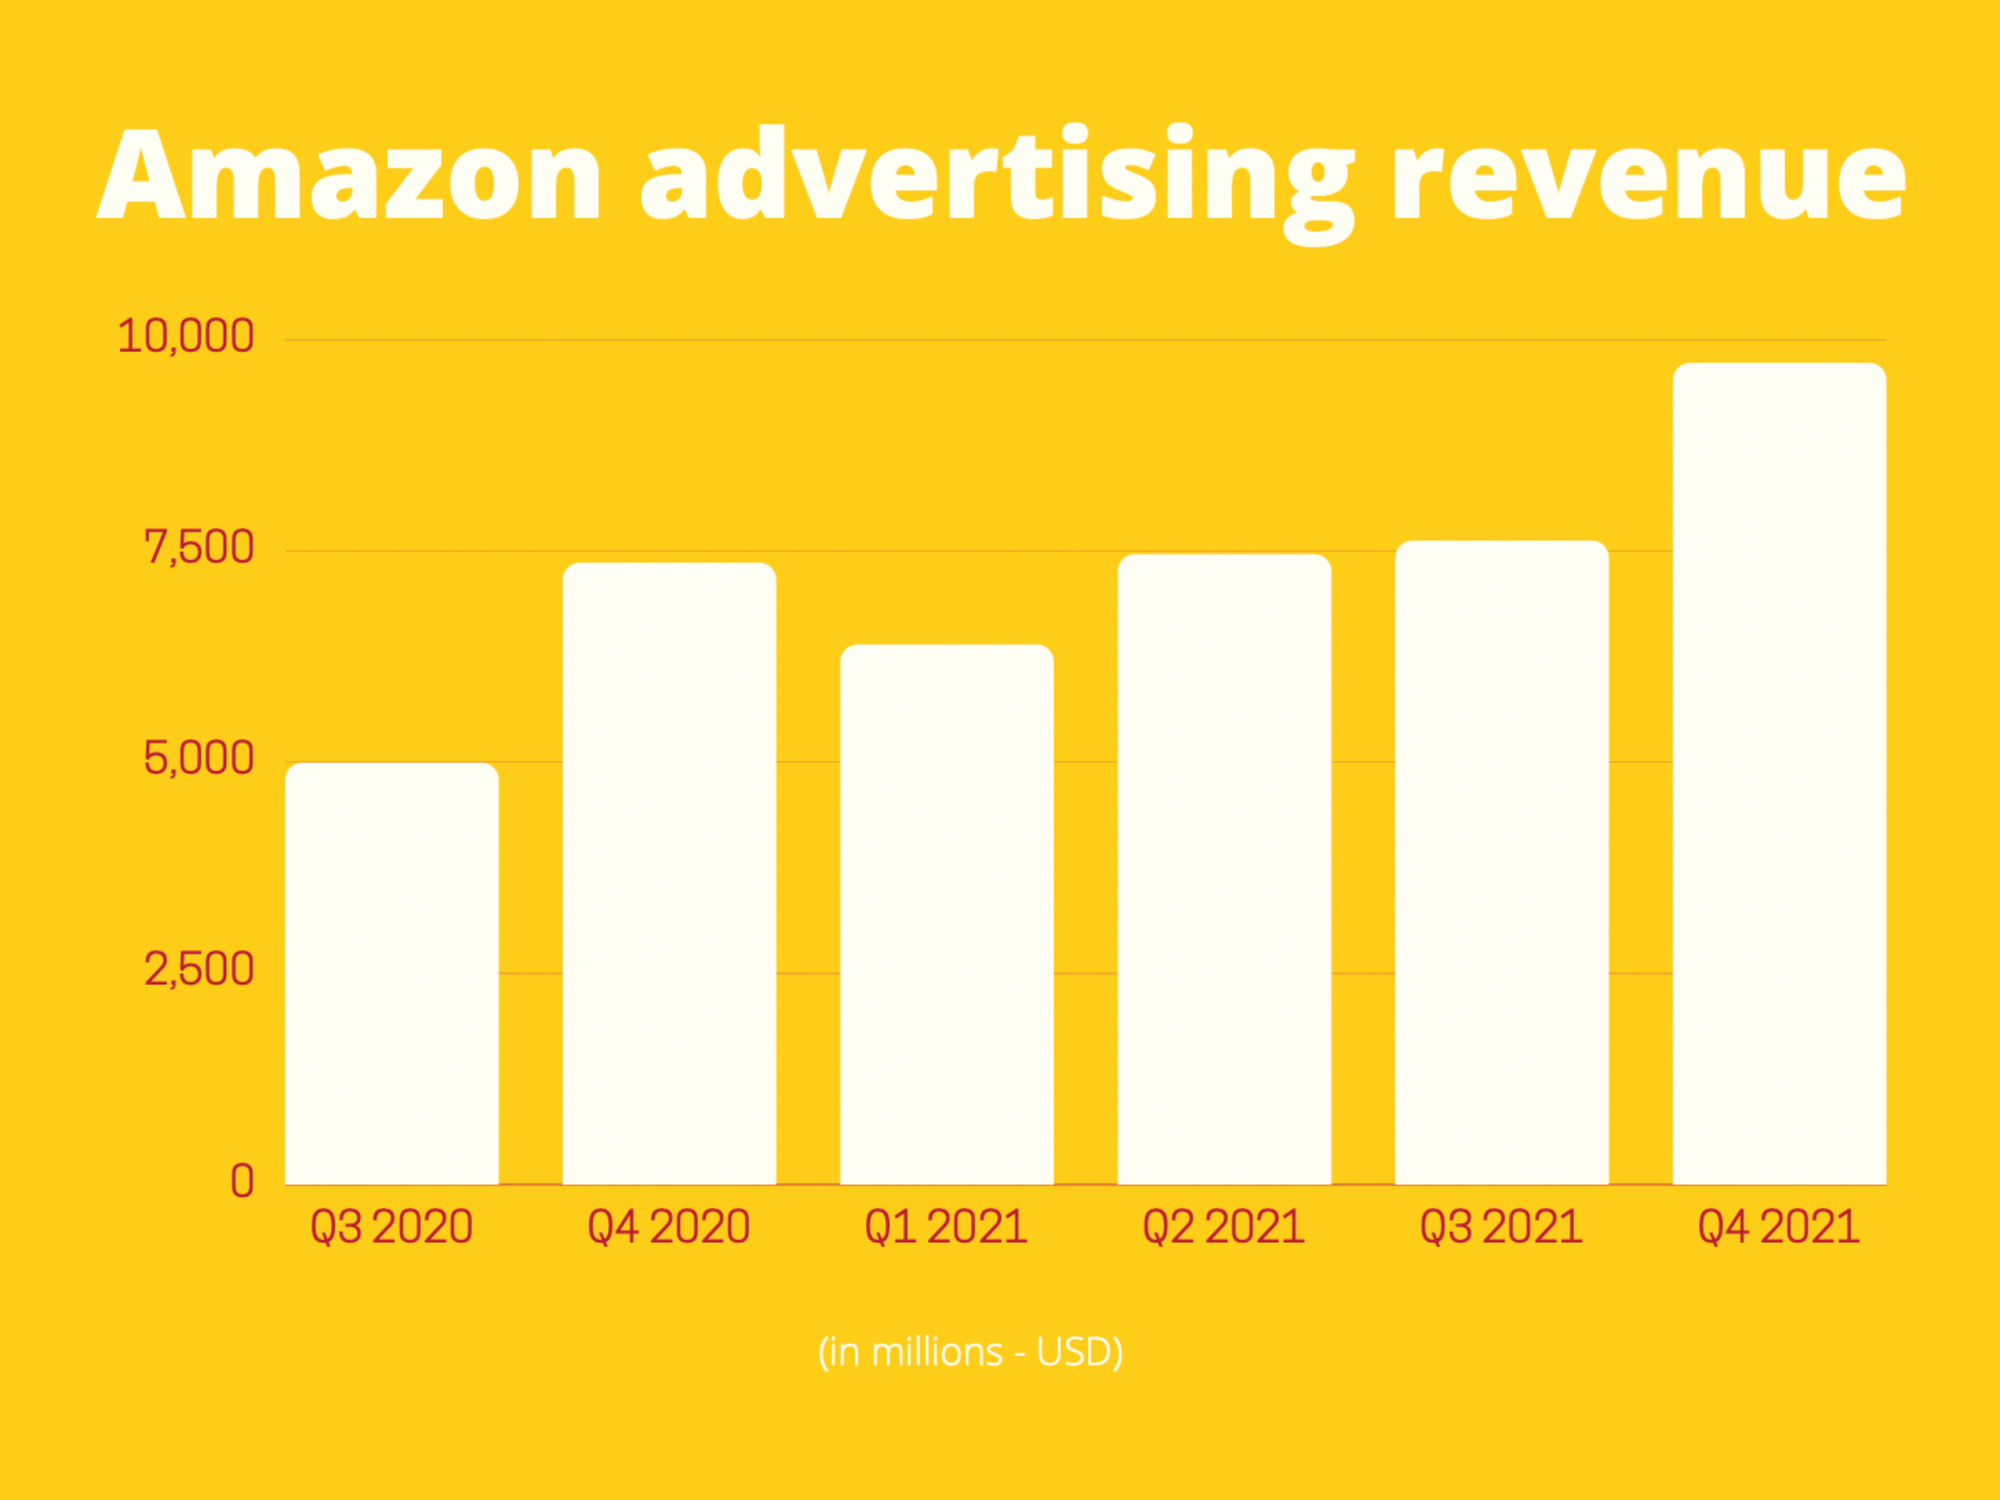 Amazon advertising revenue